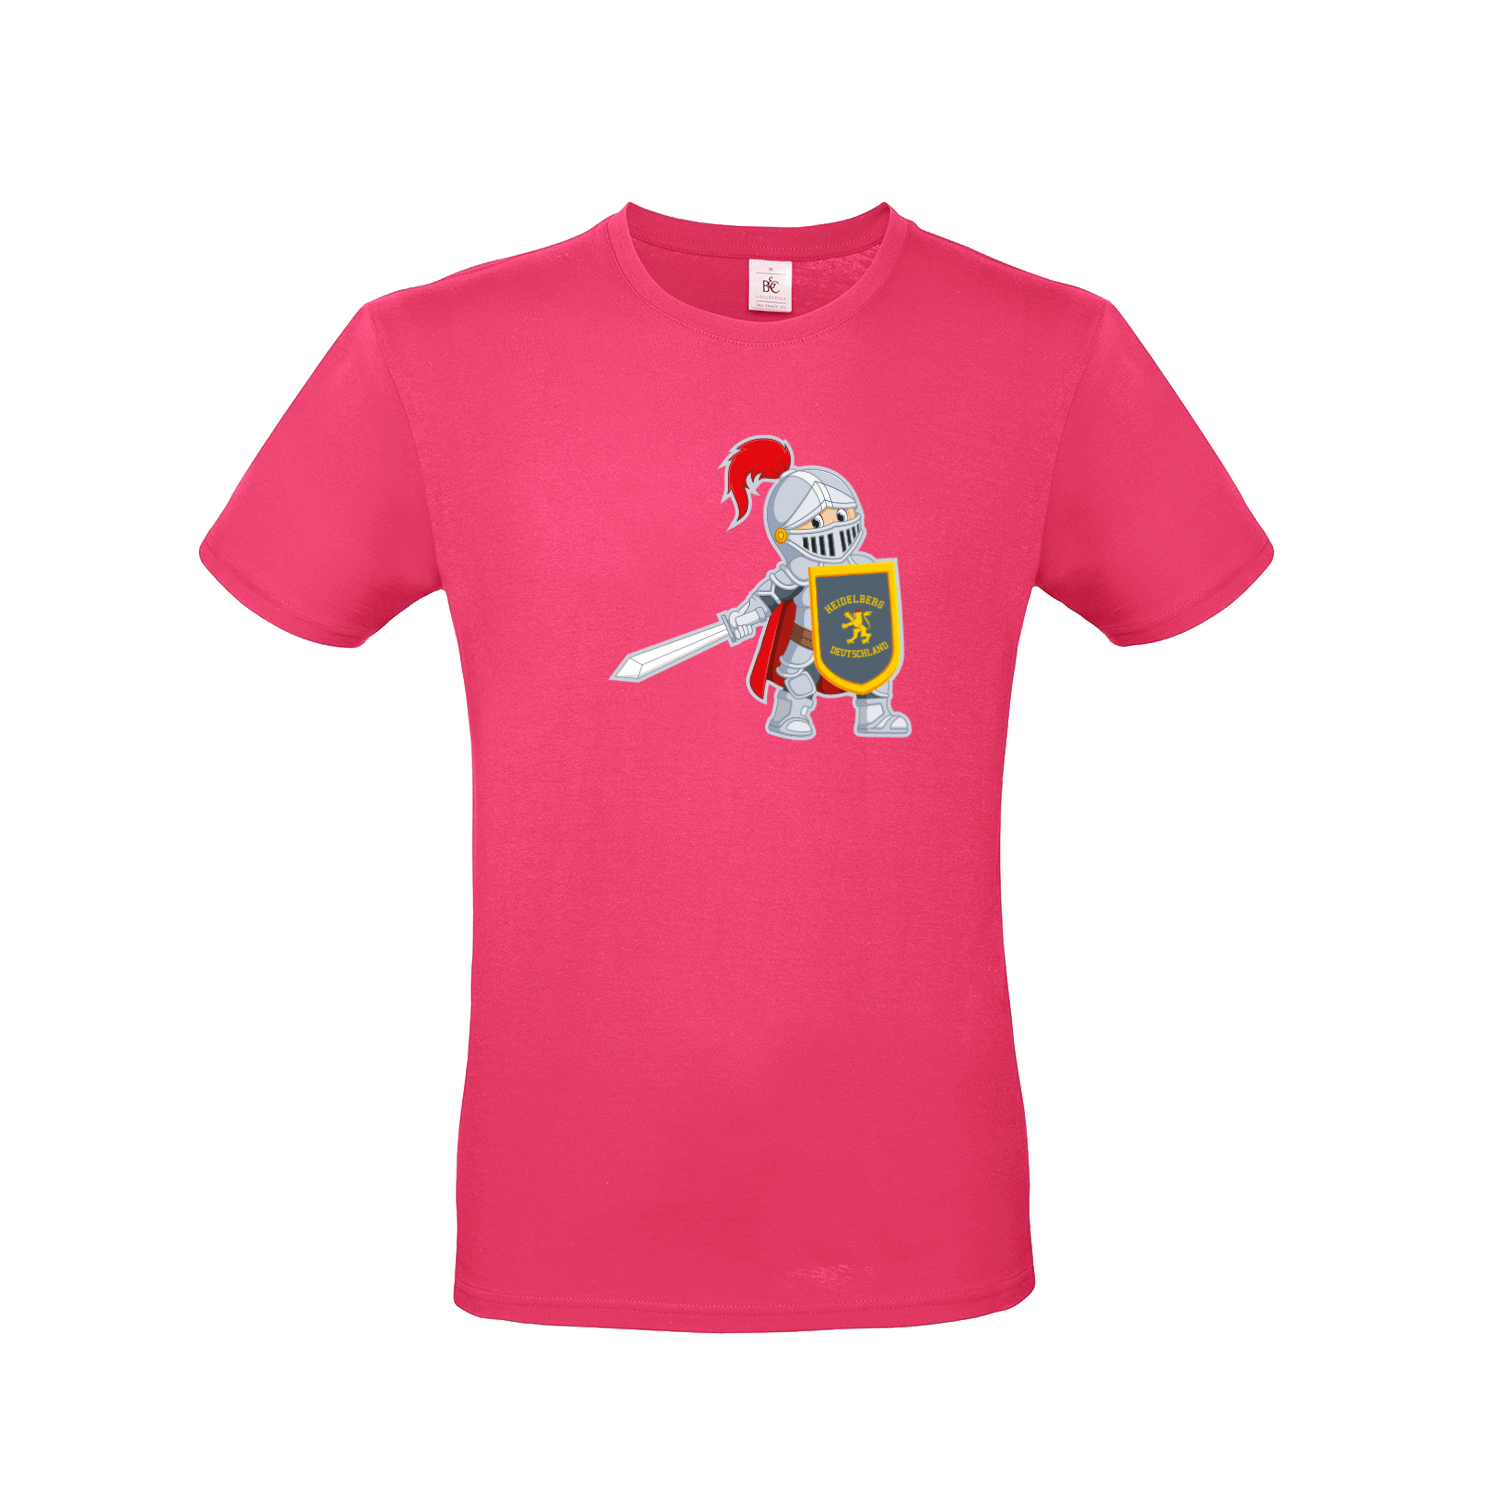 T-Shirt Kinde – print sonne. gras. Fair Wear & design ritter. i-AM